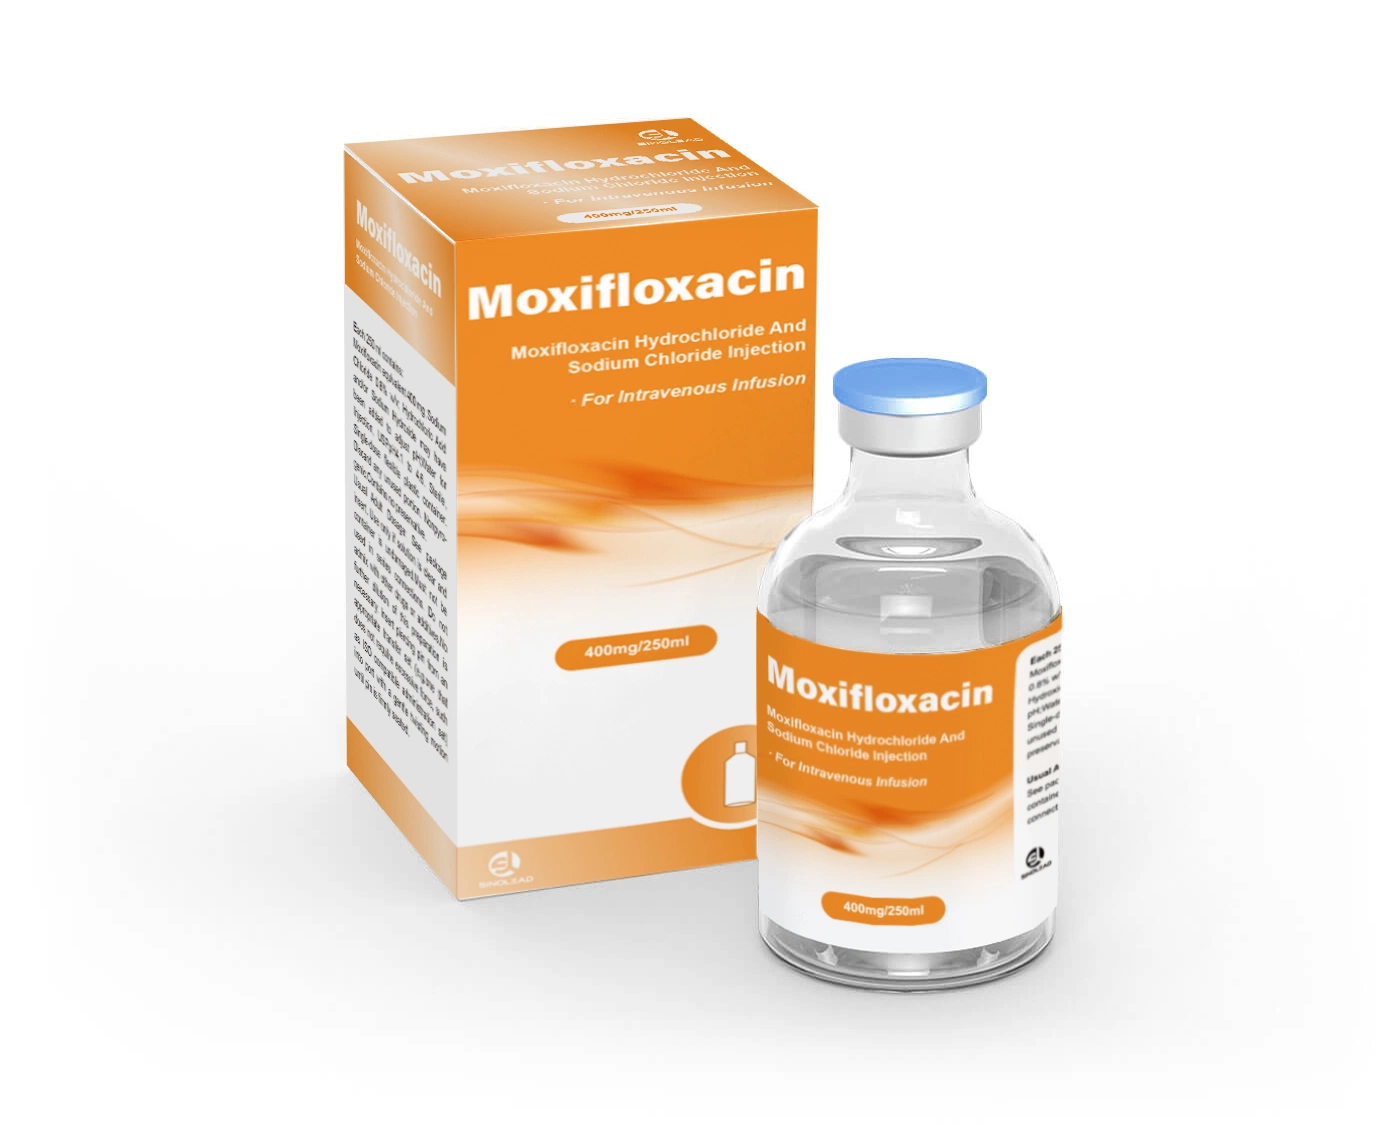 High Quality Infusion Moxifloxacin Hydrochloride and Sodium Chloride Injection 400mg/250ml